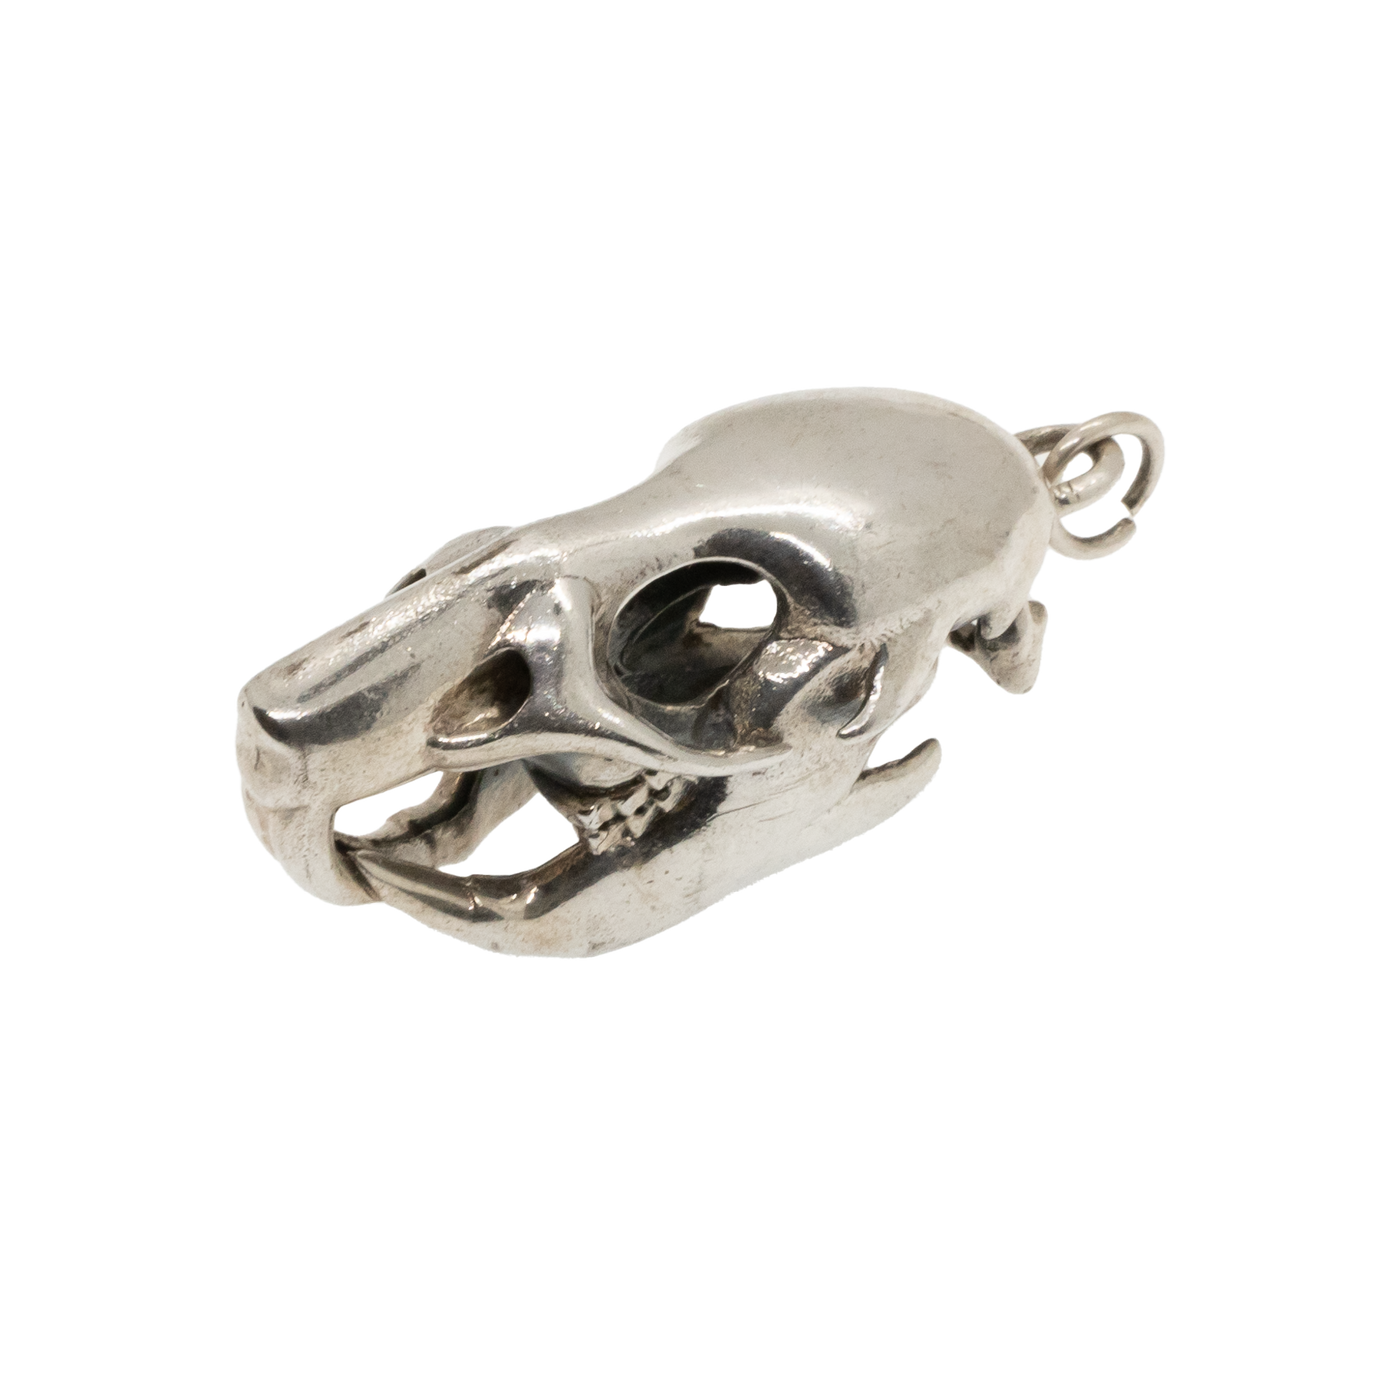 Bellamarsh Rat Skull Pendant